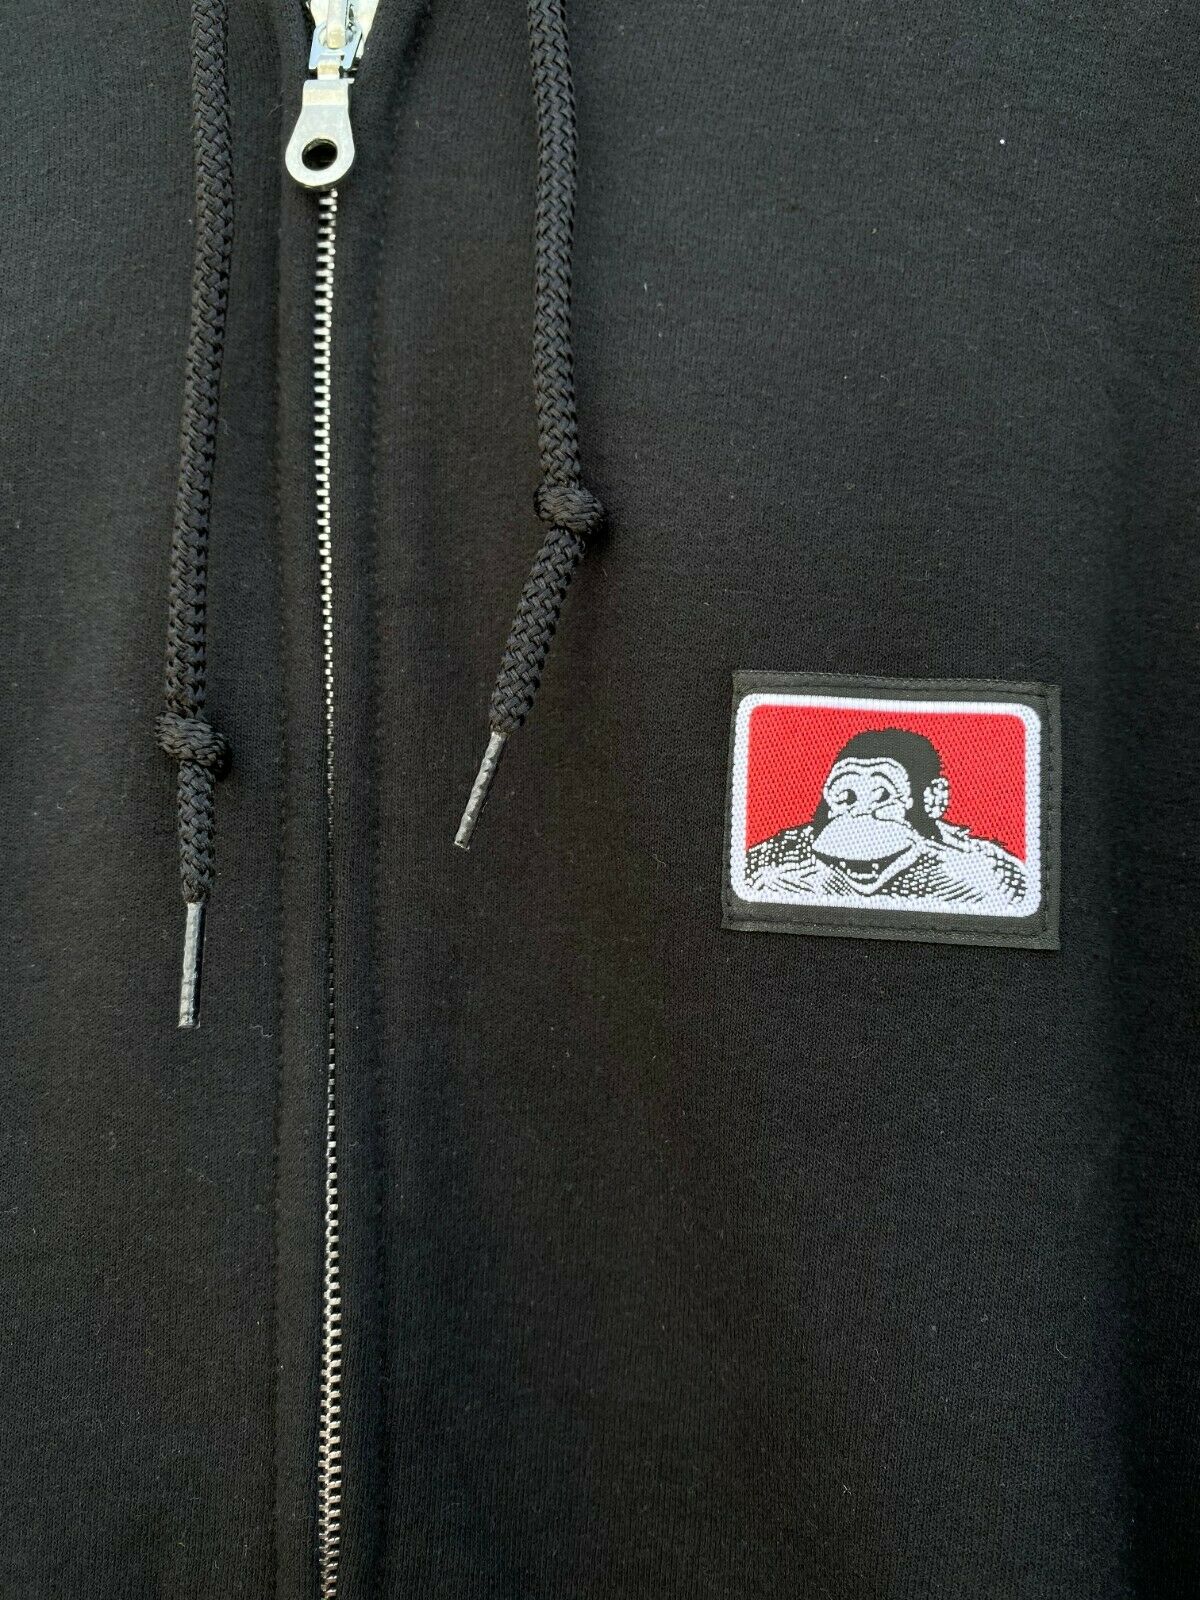 Hooded Zip Sweatshirt with Logo - Black - basicsclothing